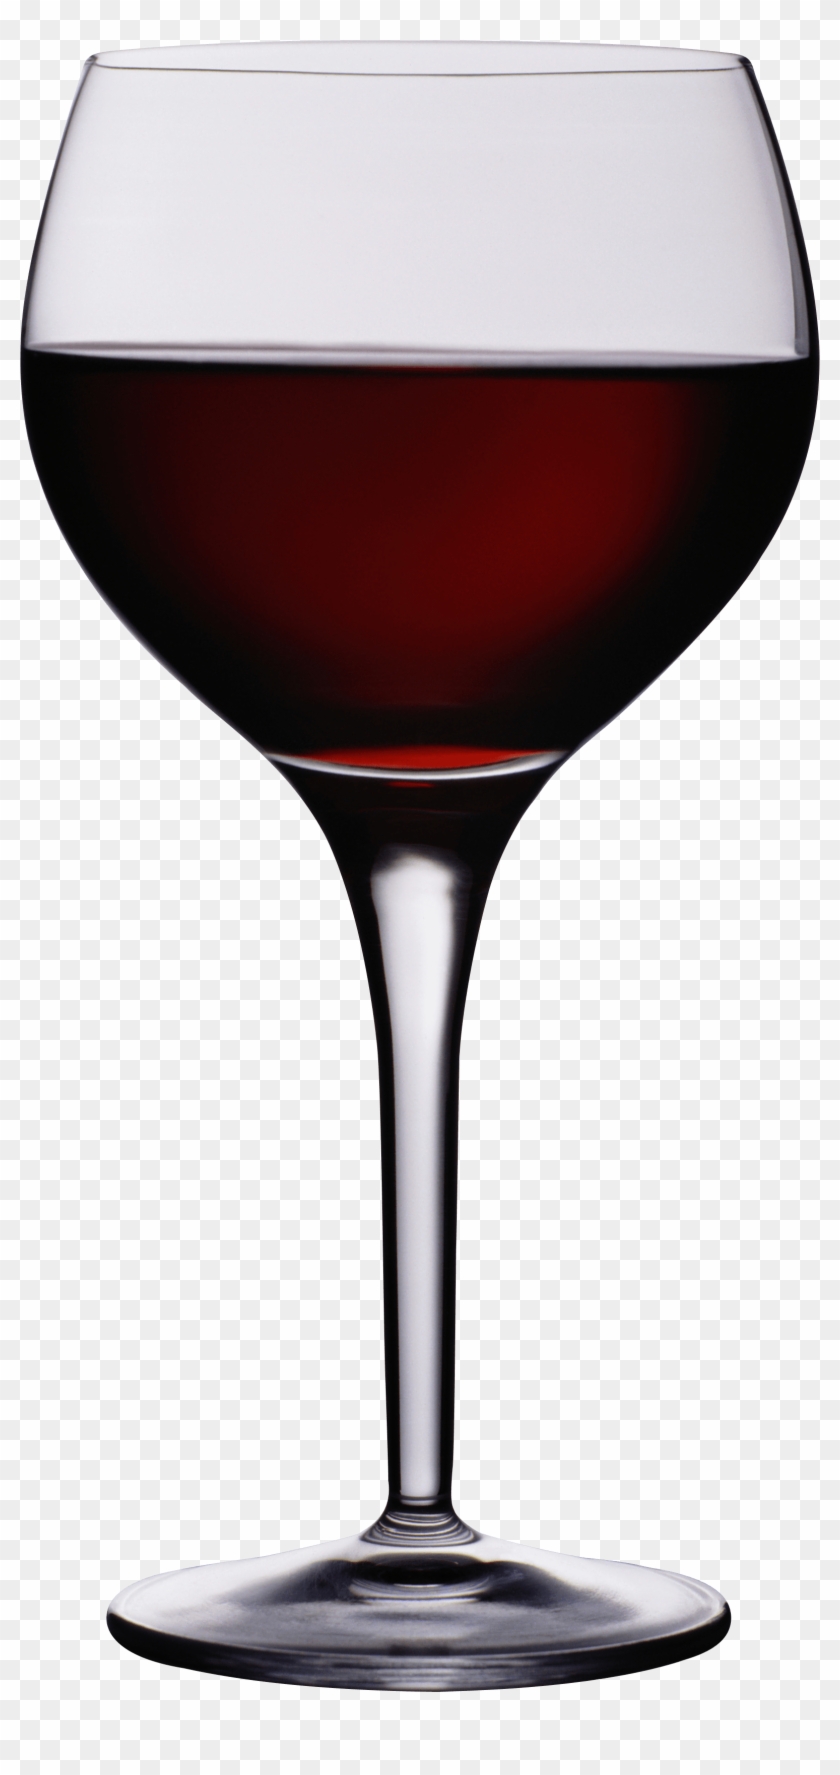 Red Wine Glasses Transparent Background - Wine Glass Transparent Background #1655527